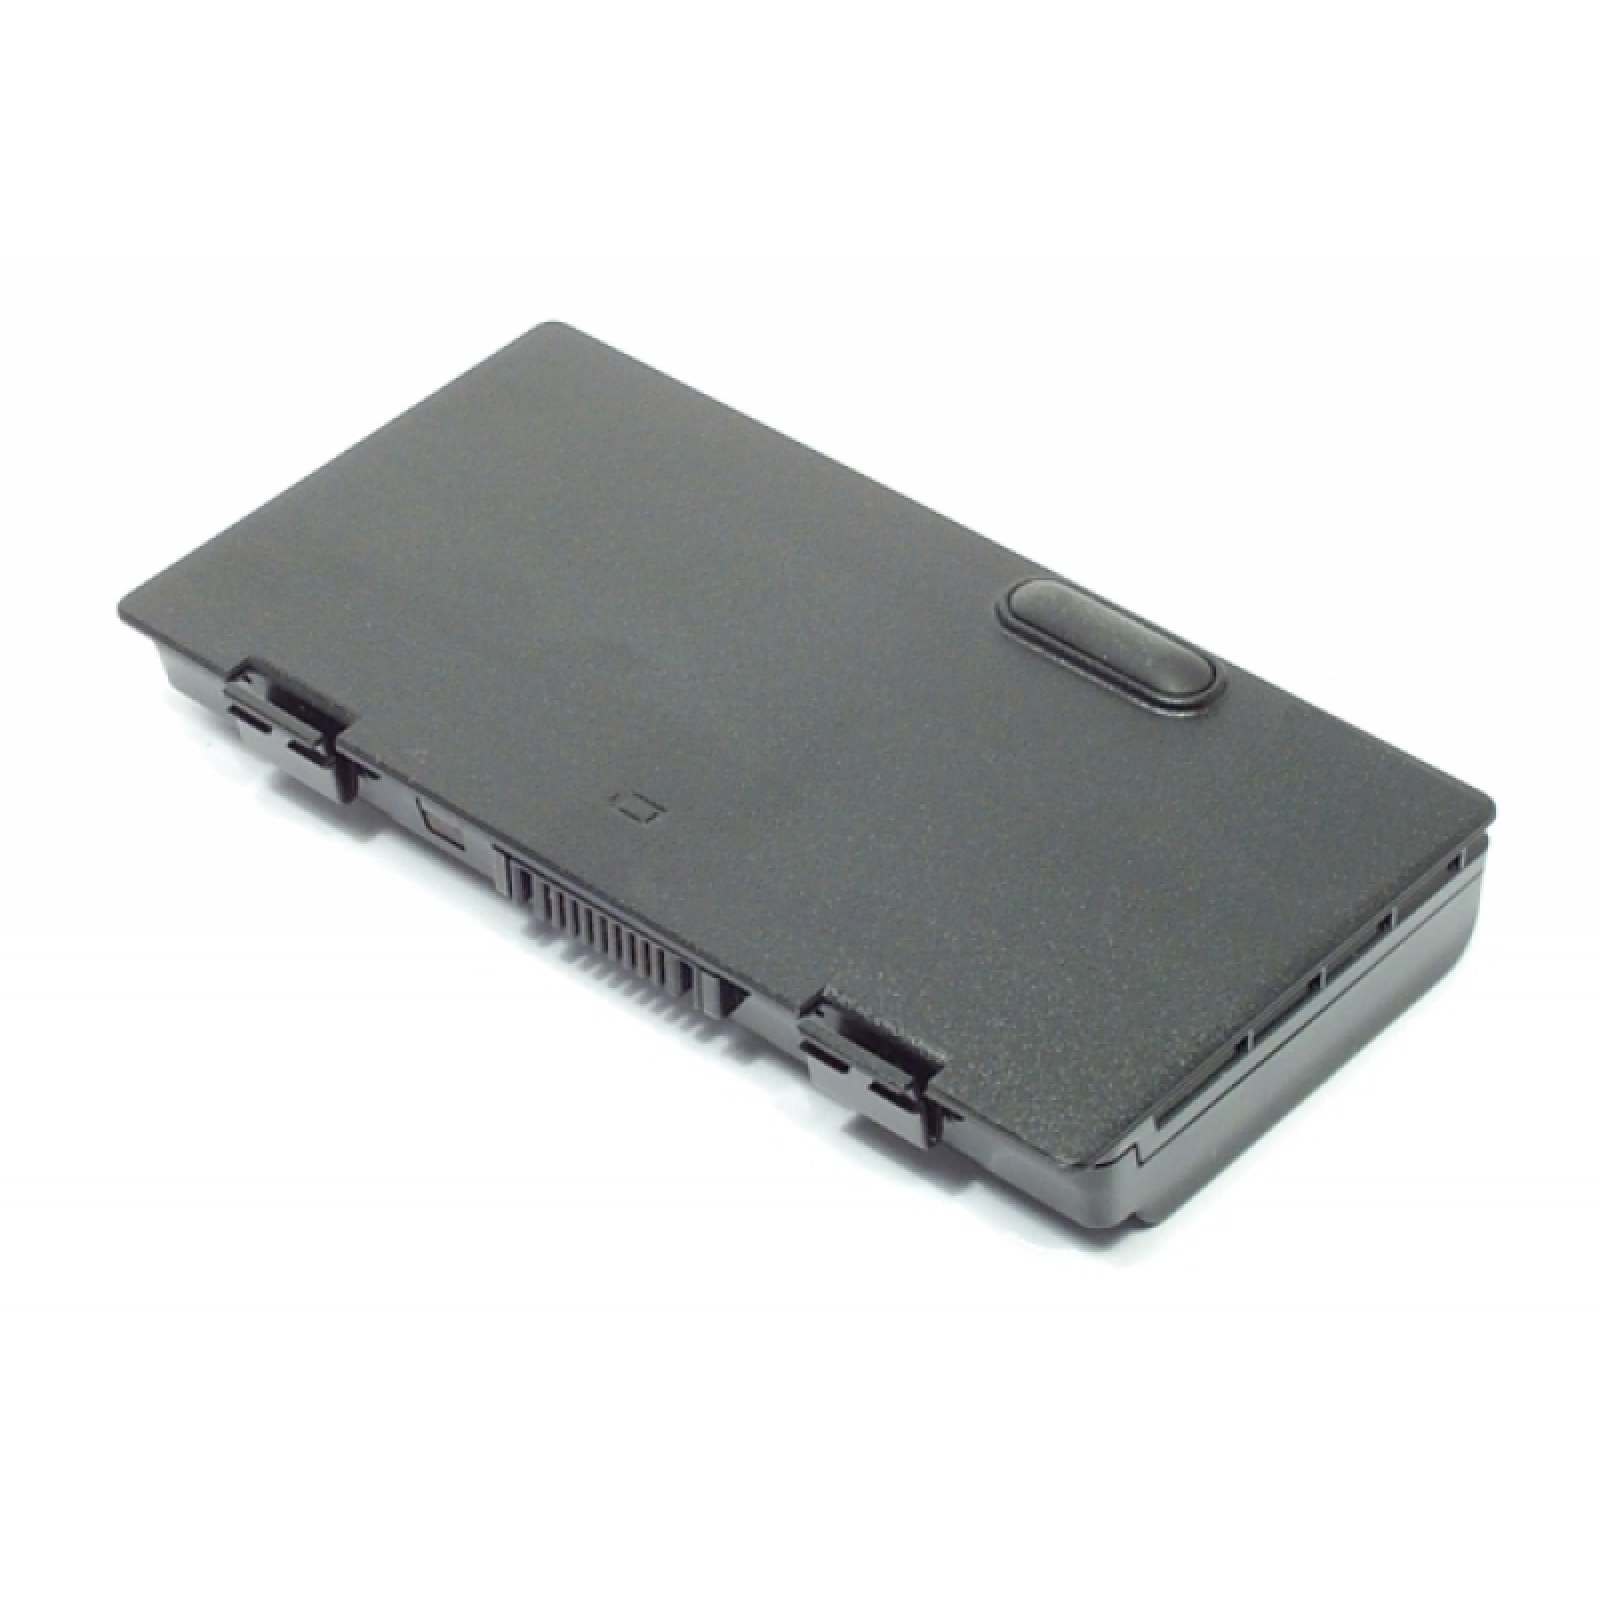 MX65 Notebook-Akku, Volt, (LiIon) PACKARD BELL 4400mAh 11.1V, MTXTEC 4400 mAh 11.1 LiIon, Lithium-Ionen Akku für